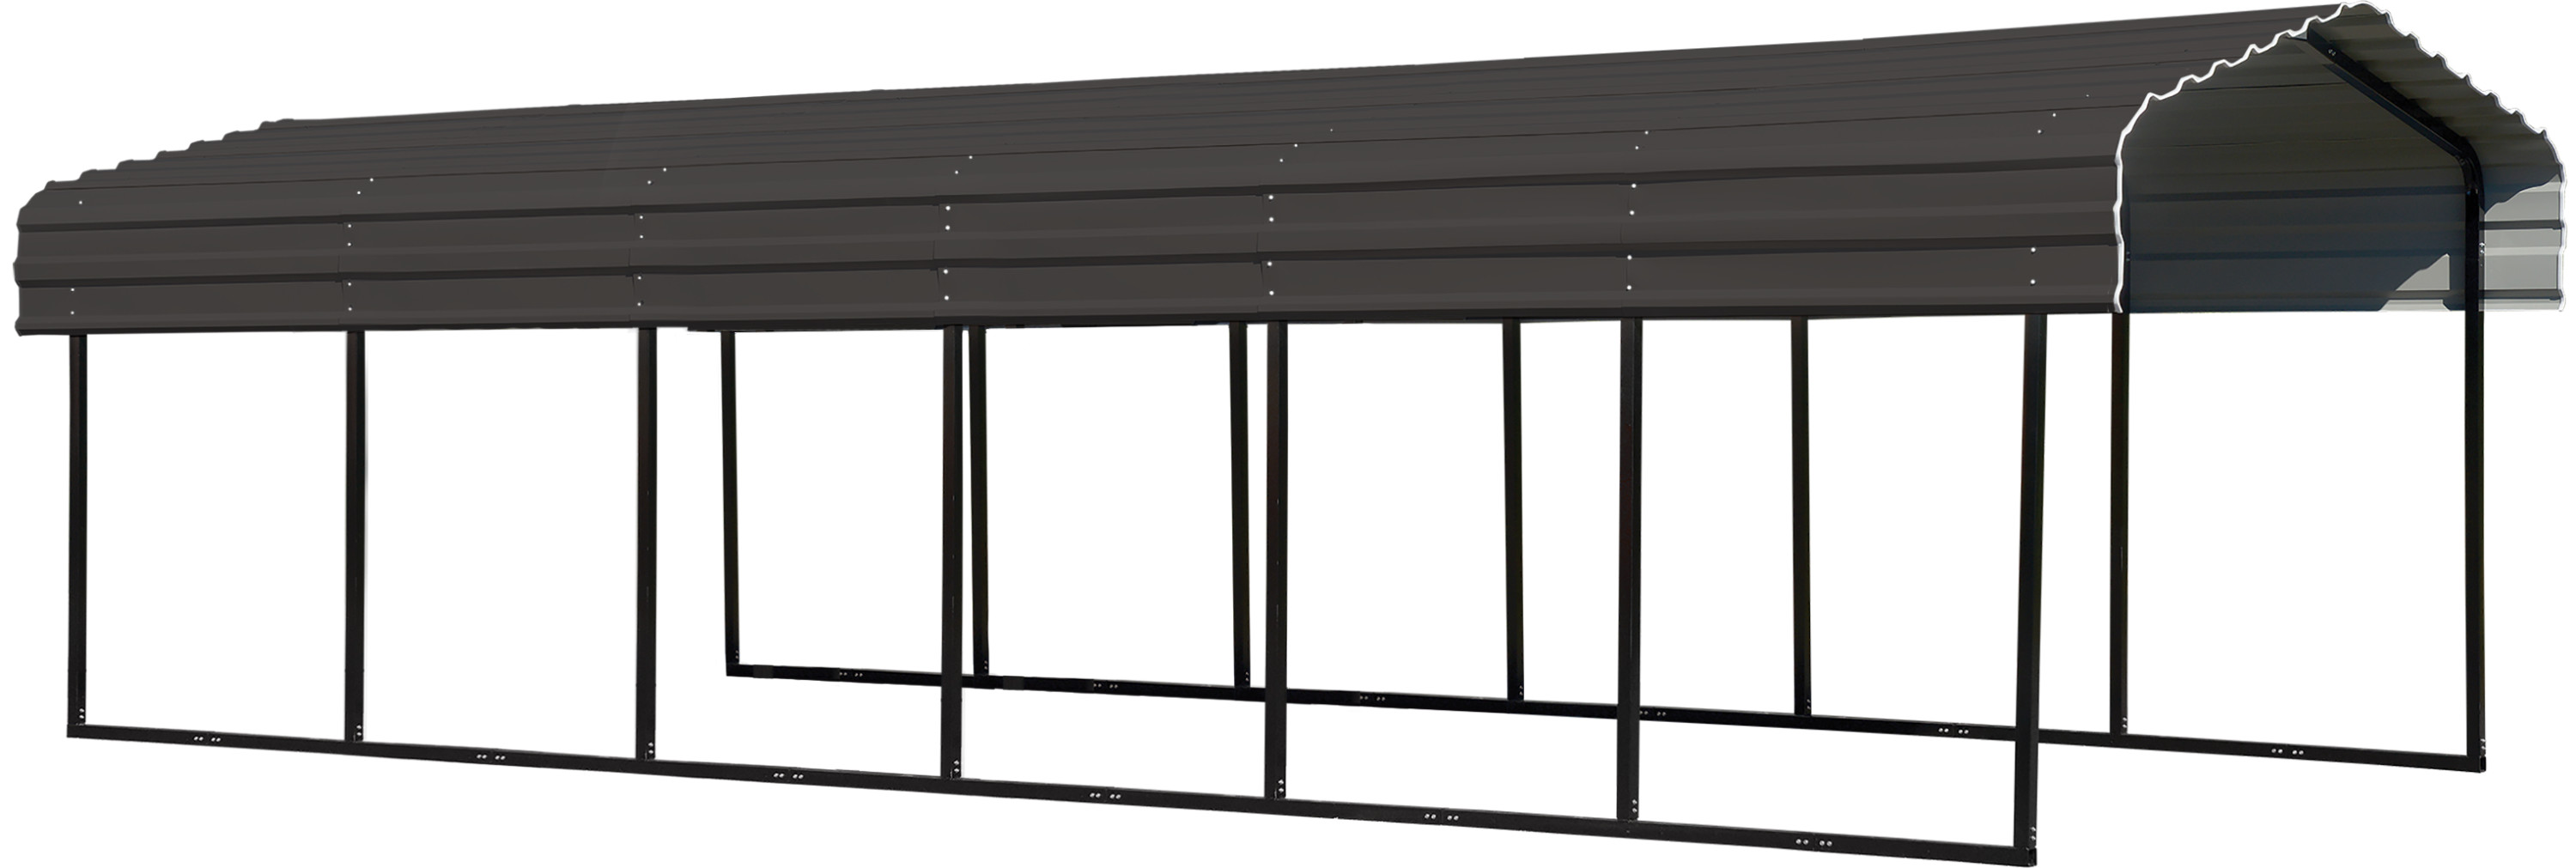 Steel Carport 10 x 29 x 7 ft. Galvanized Black/Charcoal - image 2 of 14